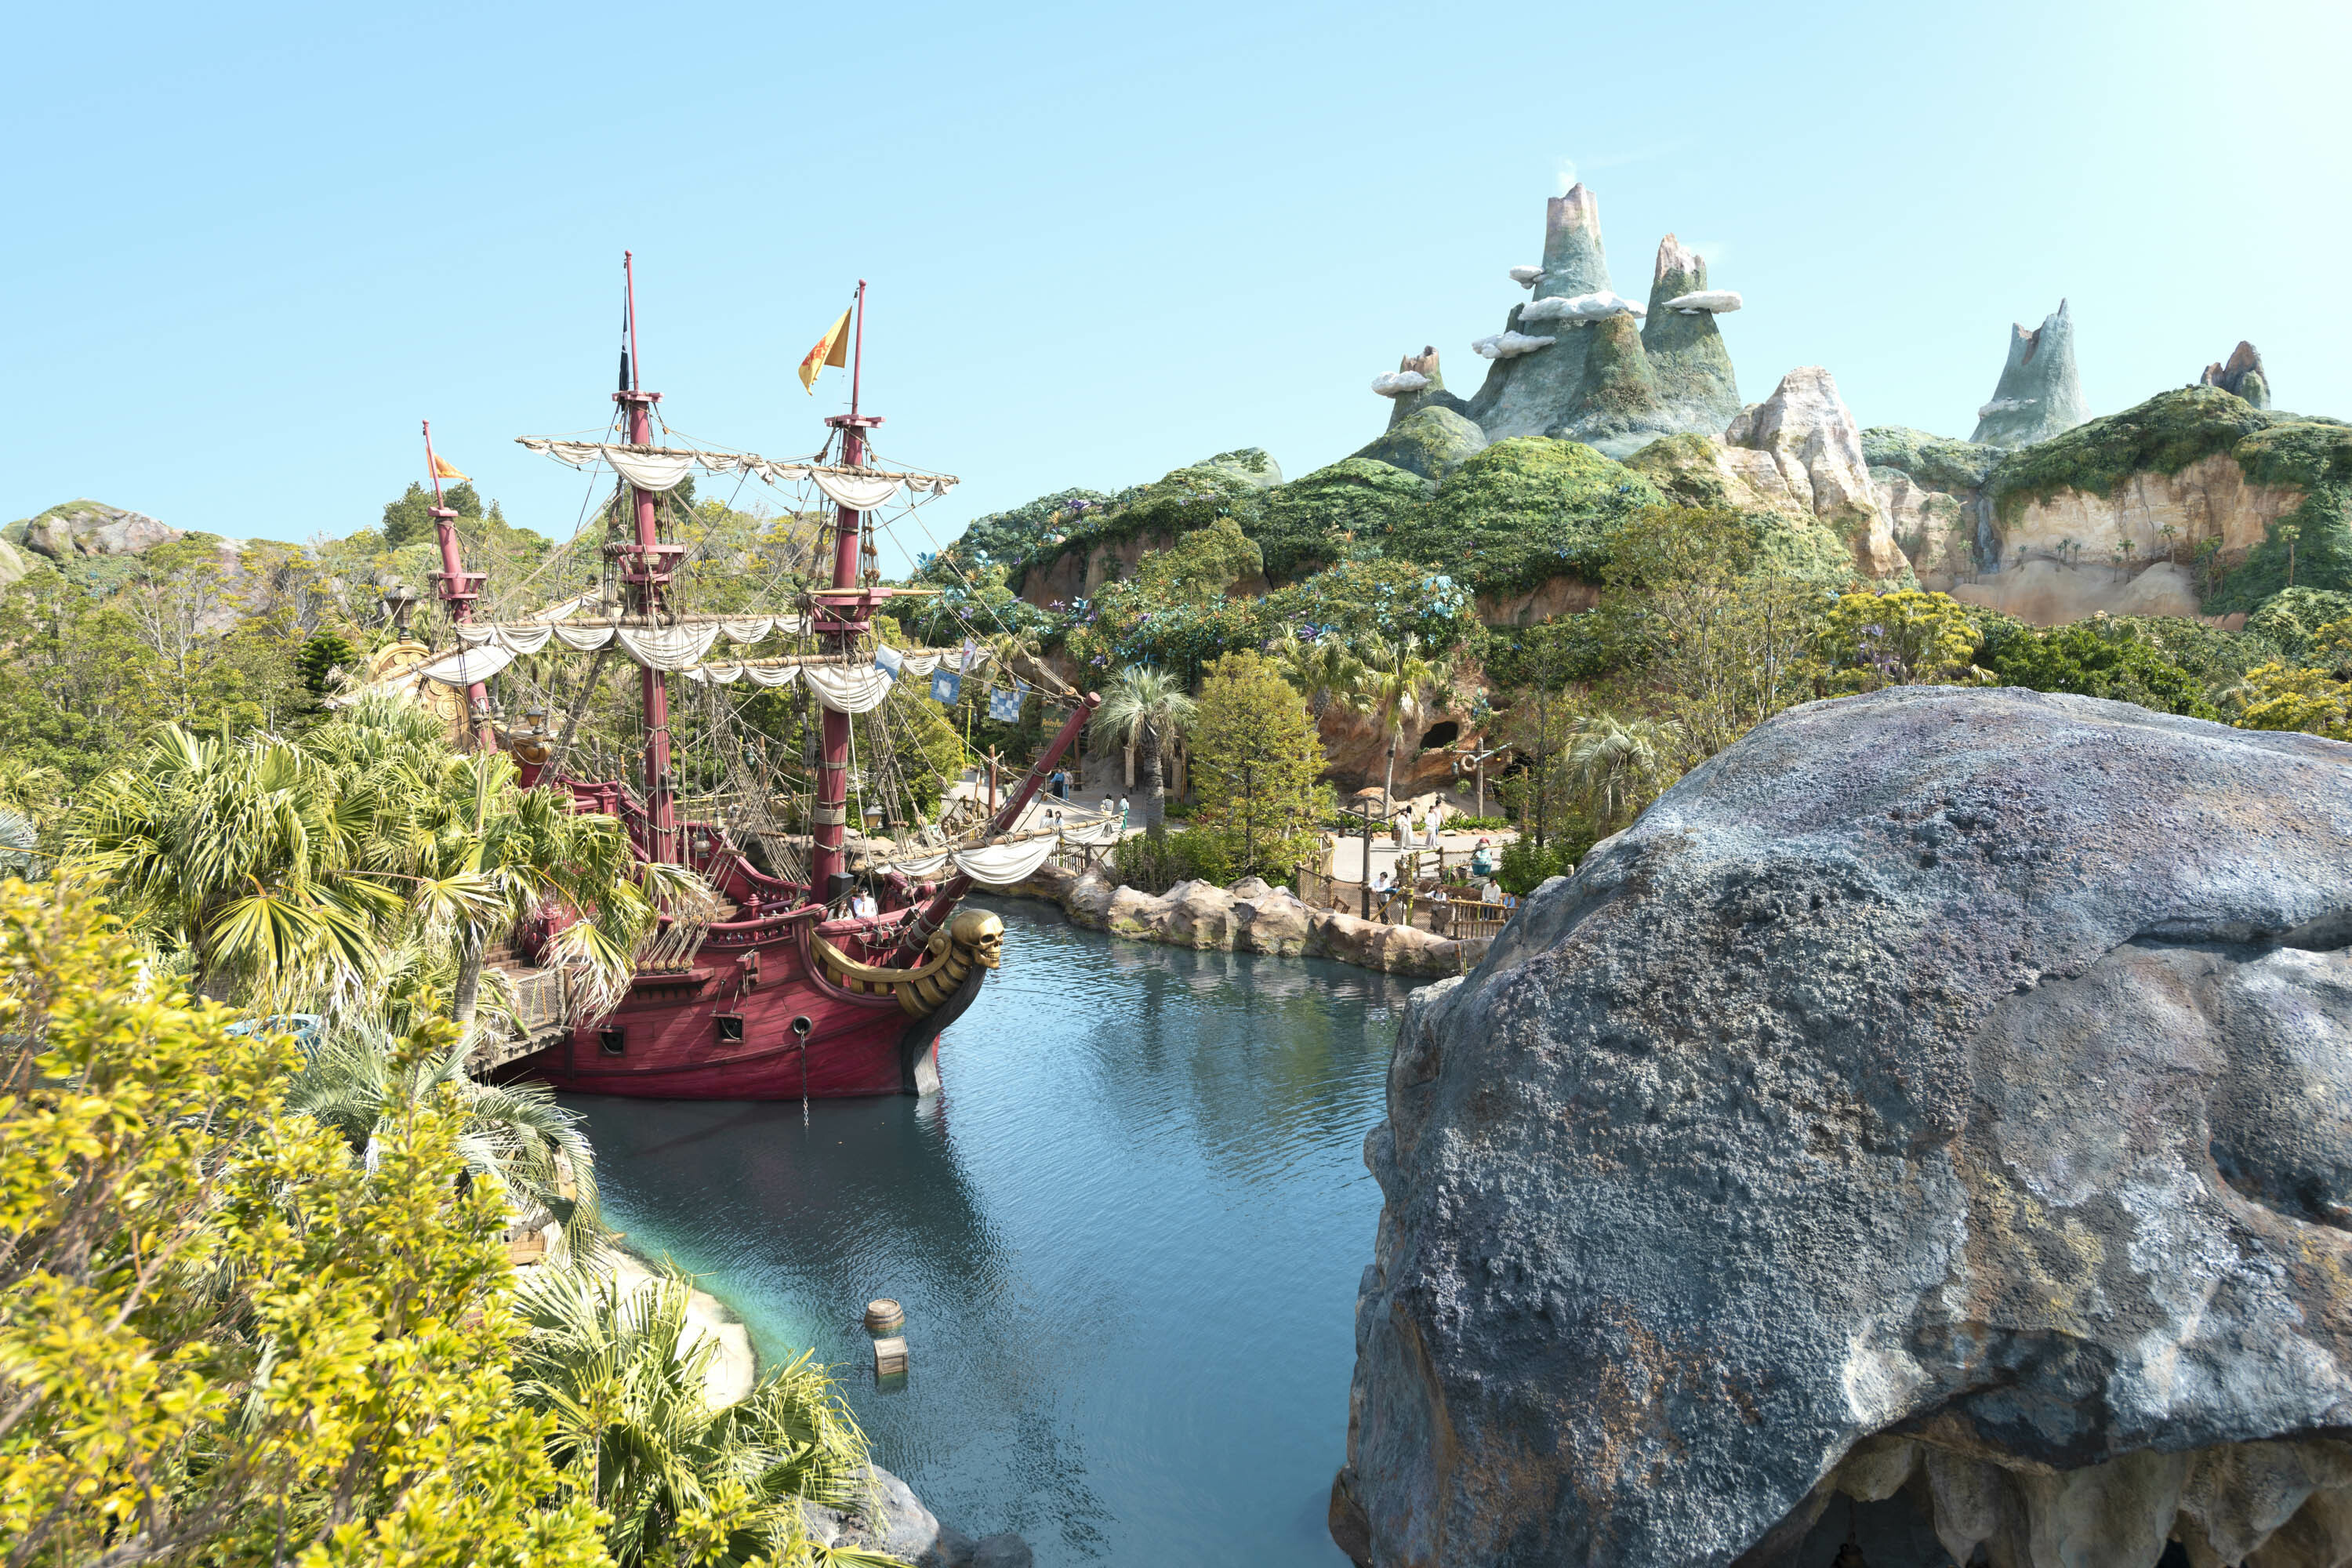 Tokyo DisneySea's new Fantasy Springs area is ready to open in 